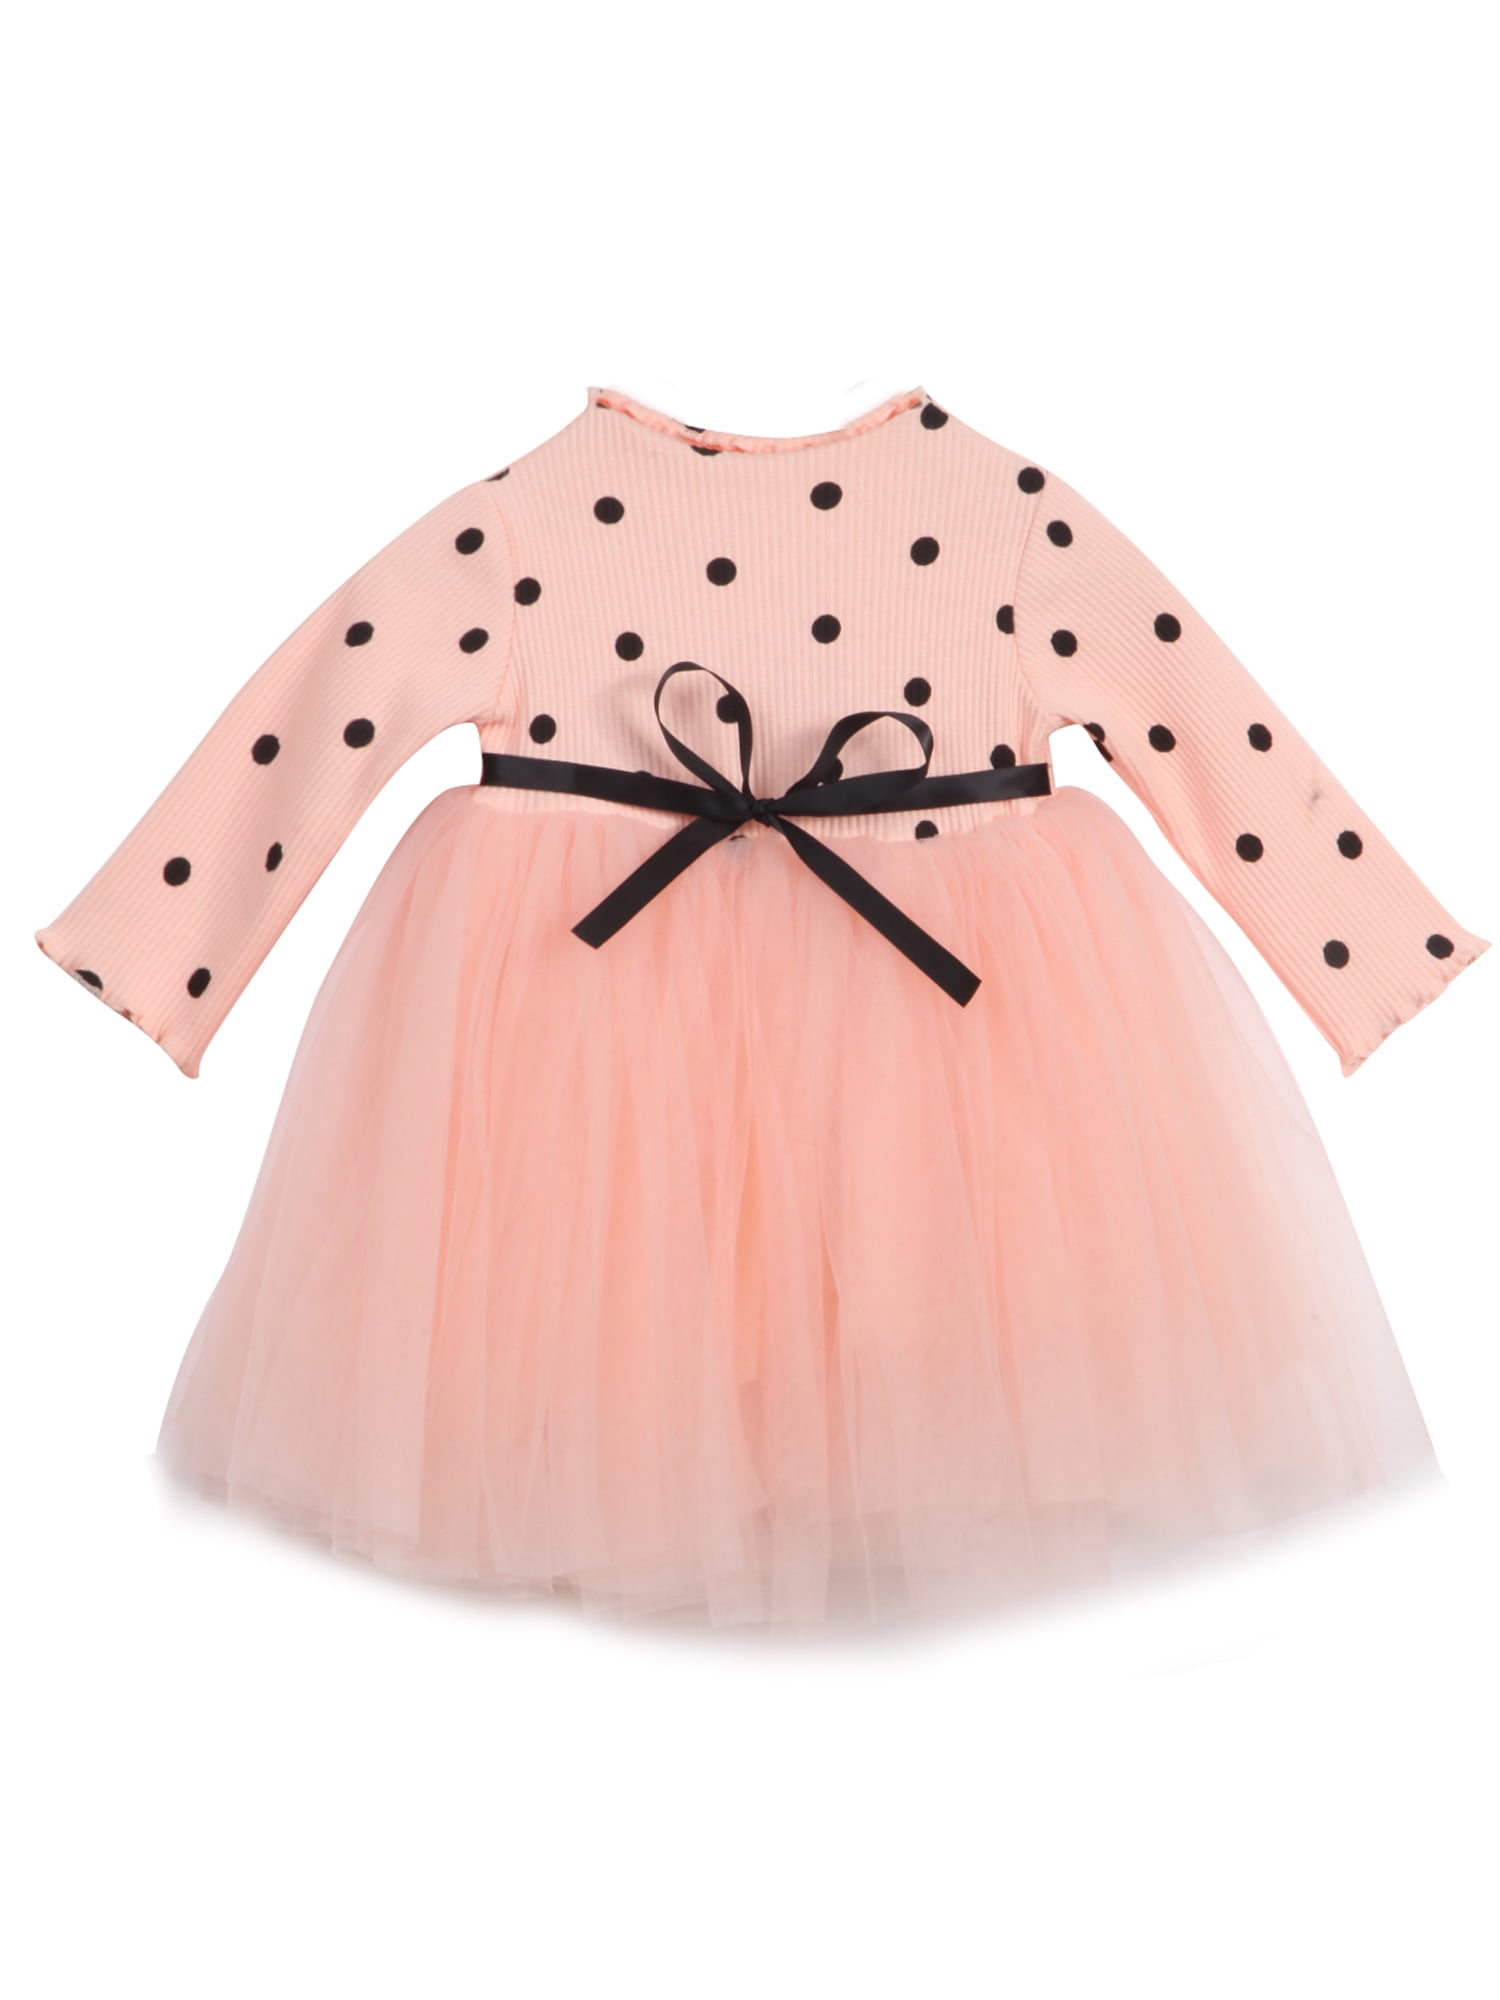 LYXIOF Baby Girls Toddler Tutu Dress Long Sleeve/Sleeveless Princess Infant Tulle Sundress 